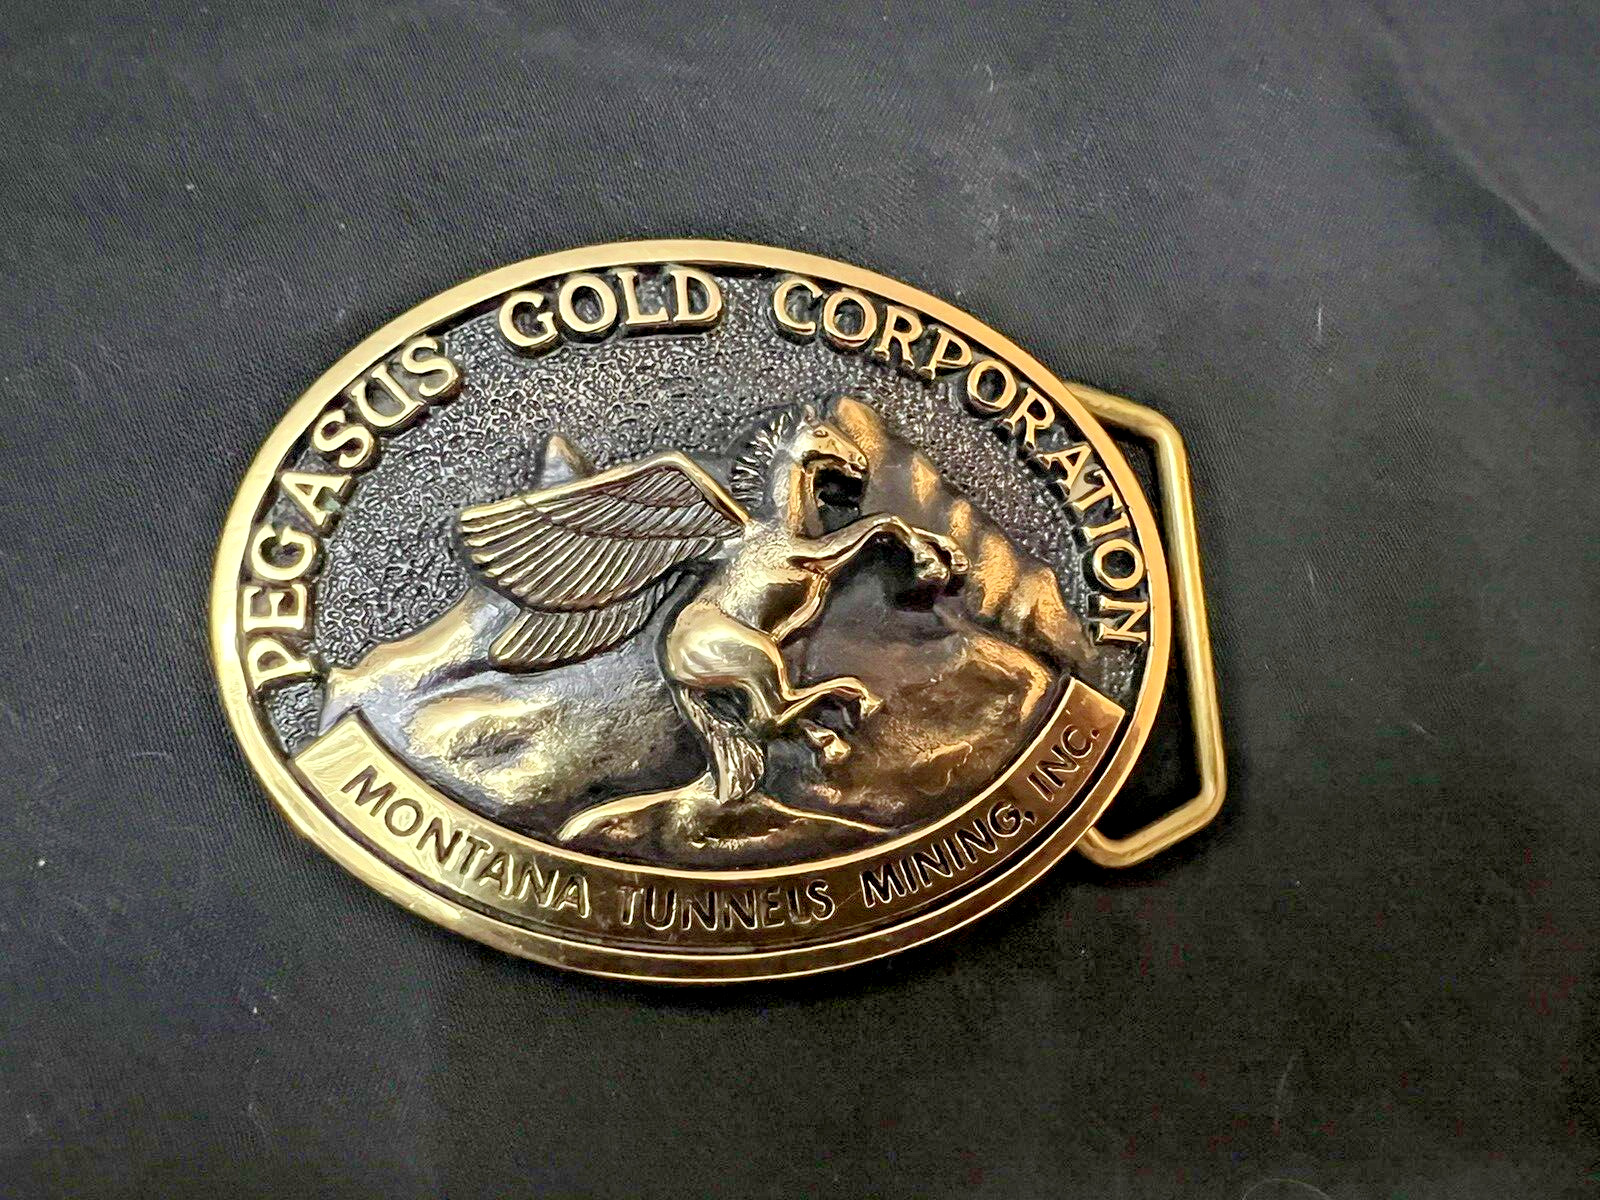 Vintage Pegasus Gold Corporation Brass Belt Buckle Montana Tunnels Mining Inc